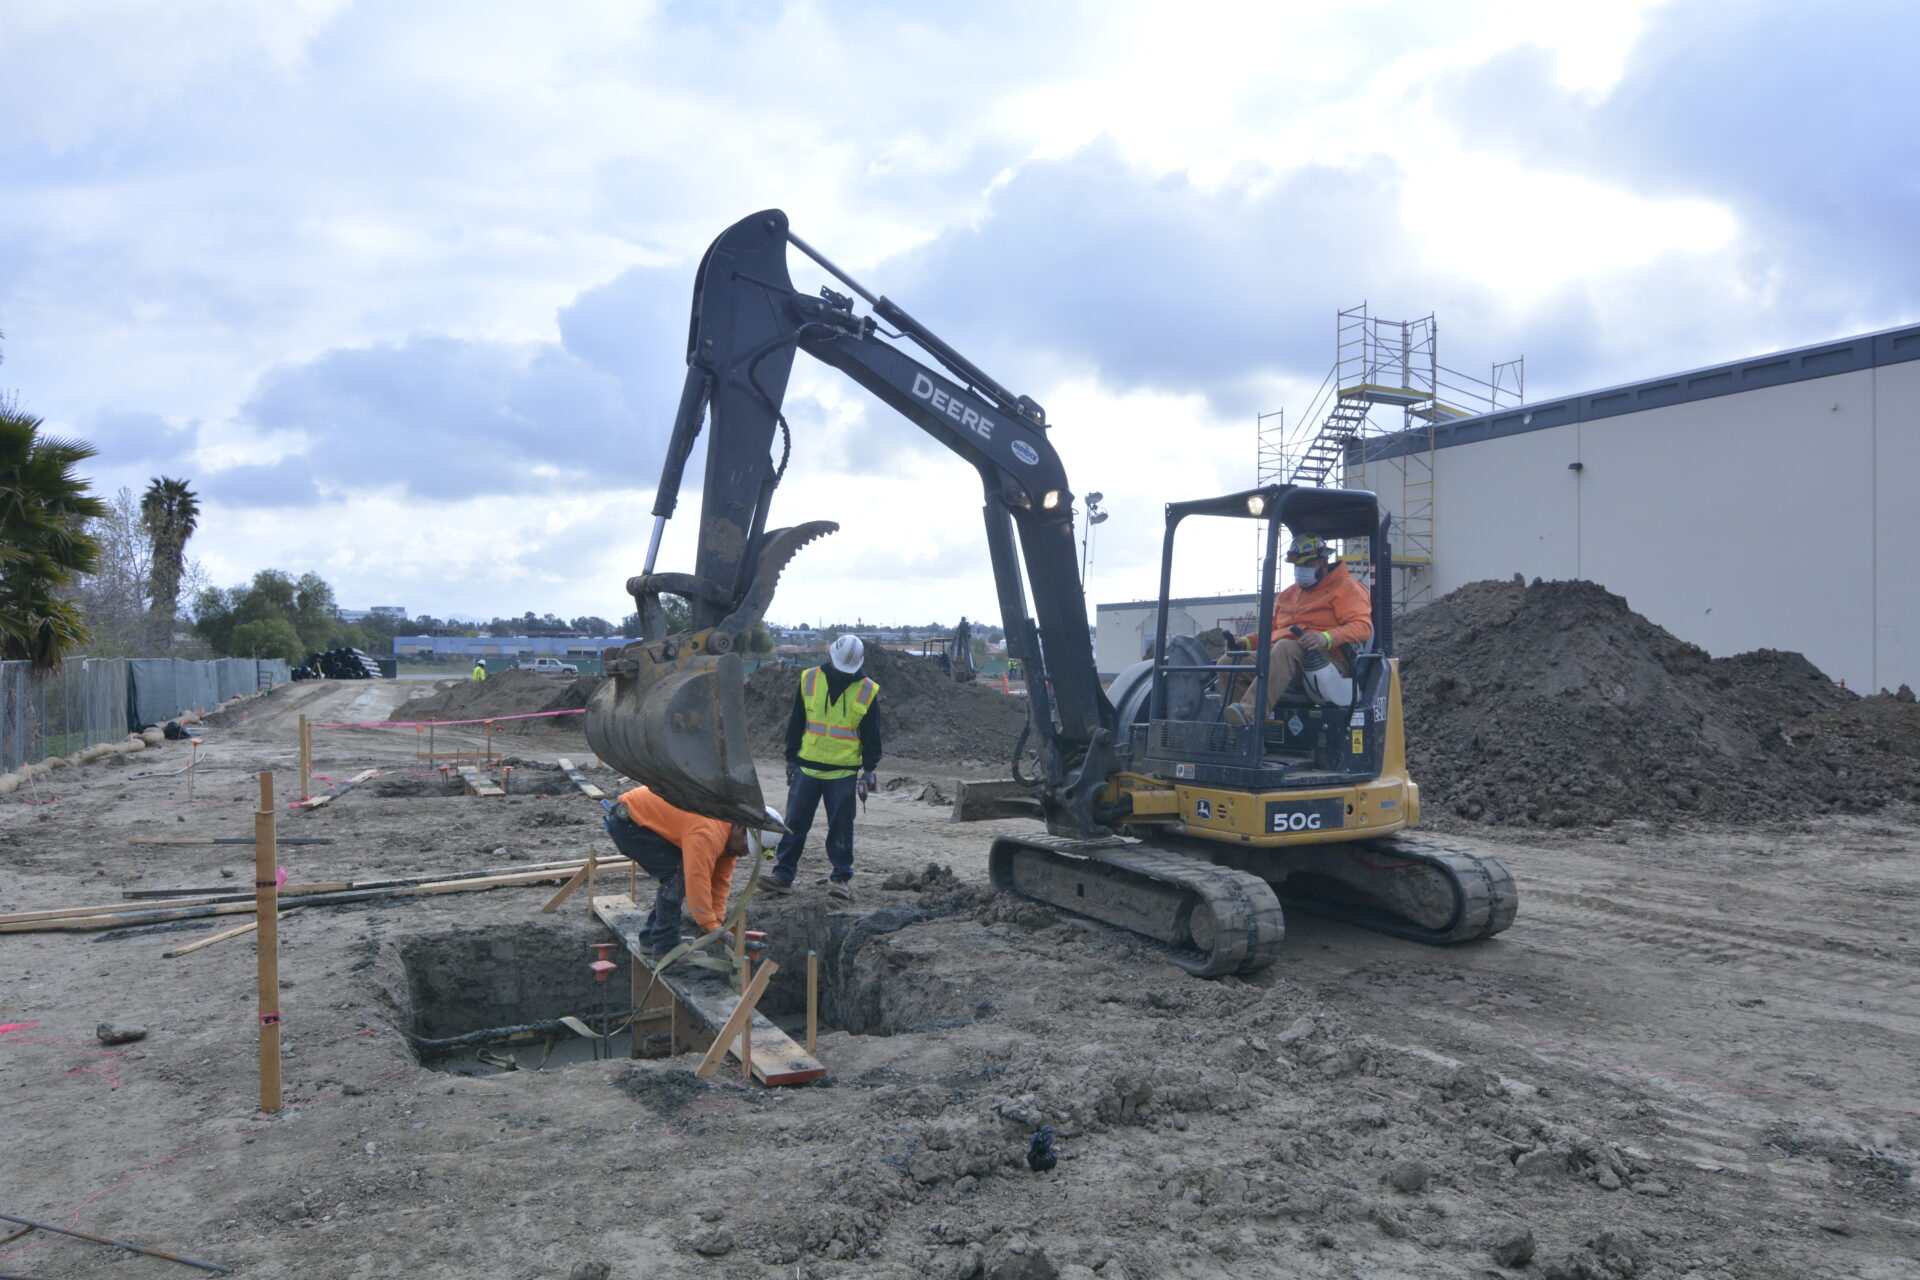 A construction equipment digging the dirt